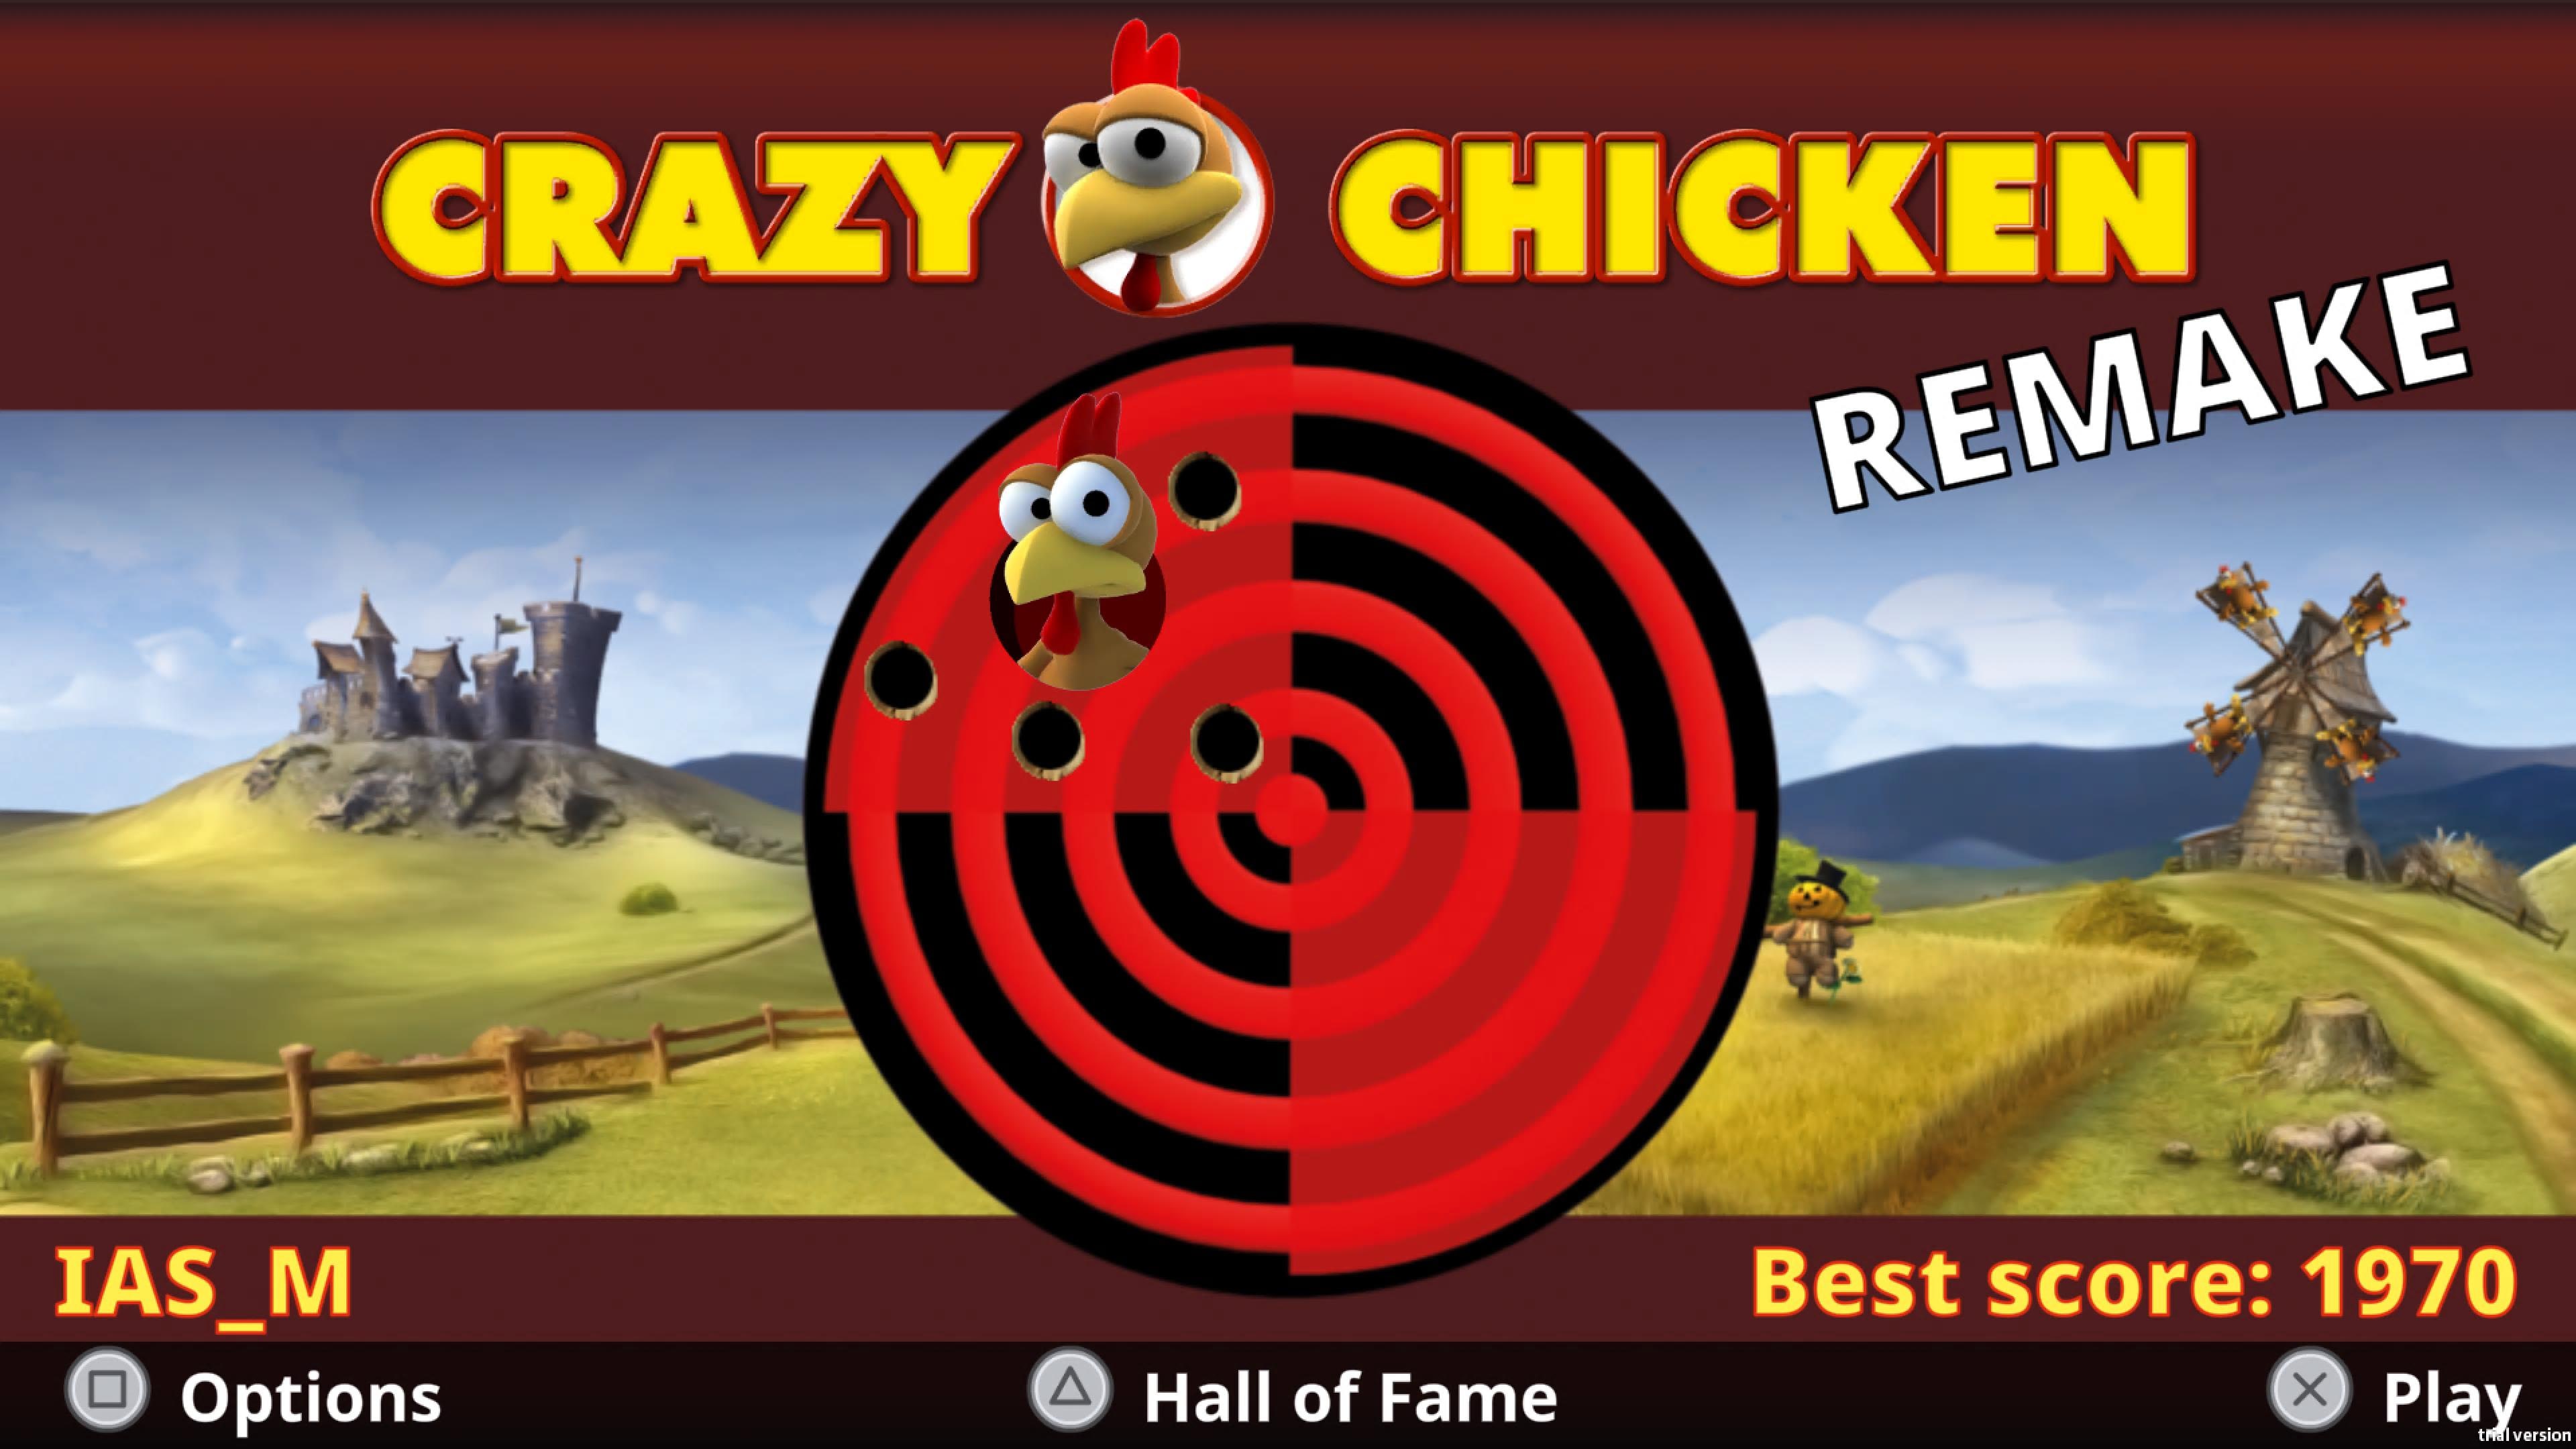 Jogo Crazy Chicken Shooter Edition PS5 no Paraguai - Atacado Games -  Paraguay